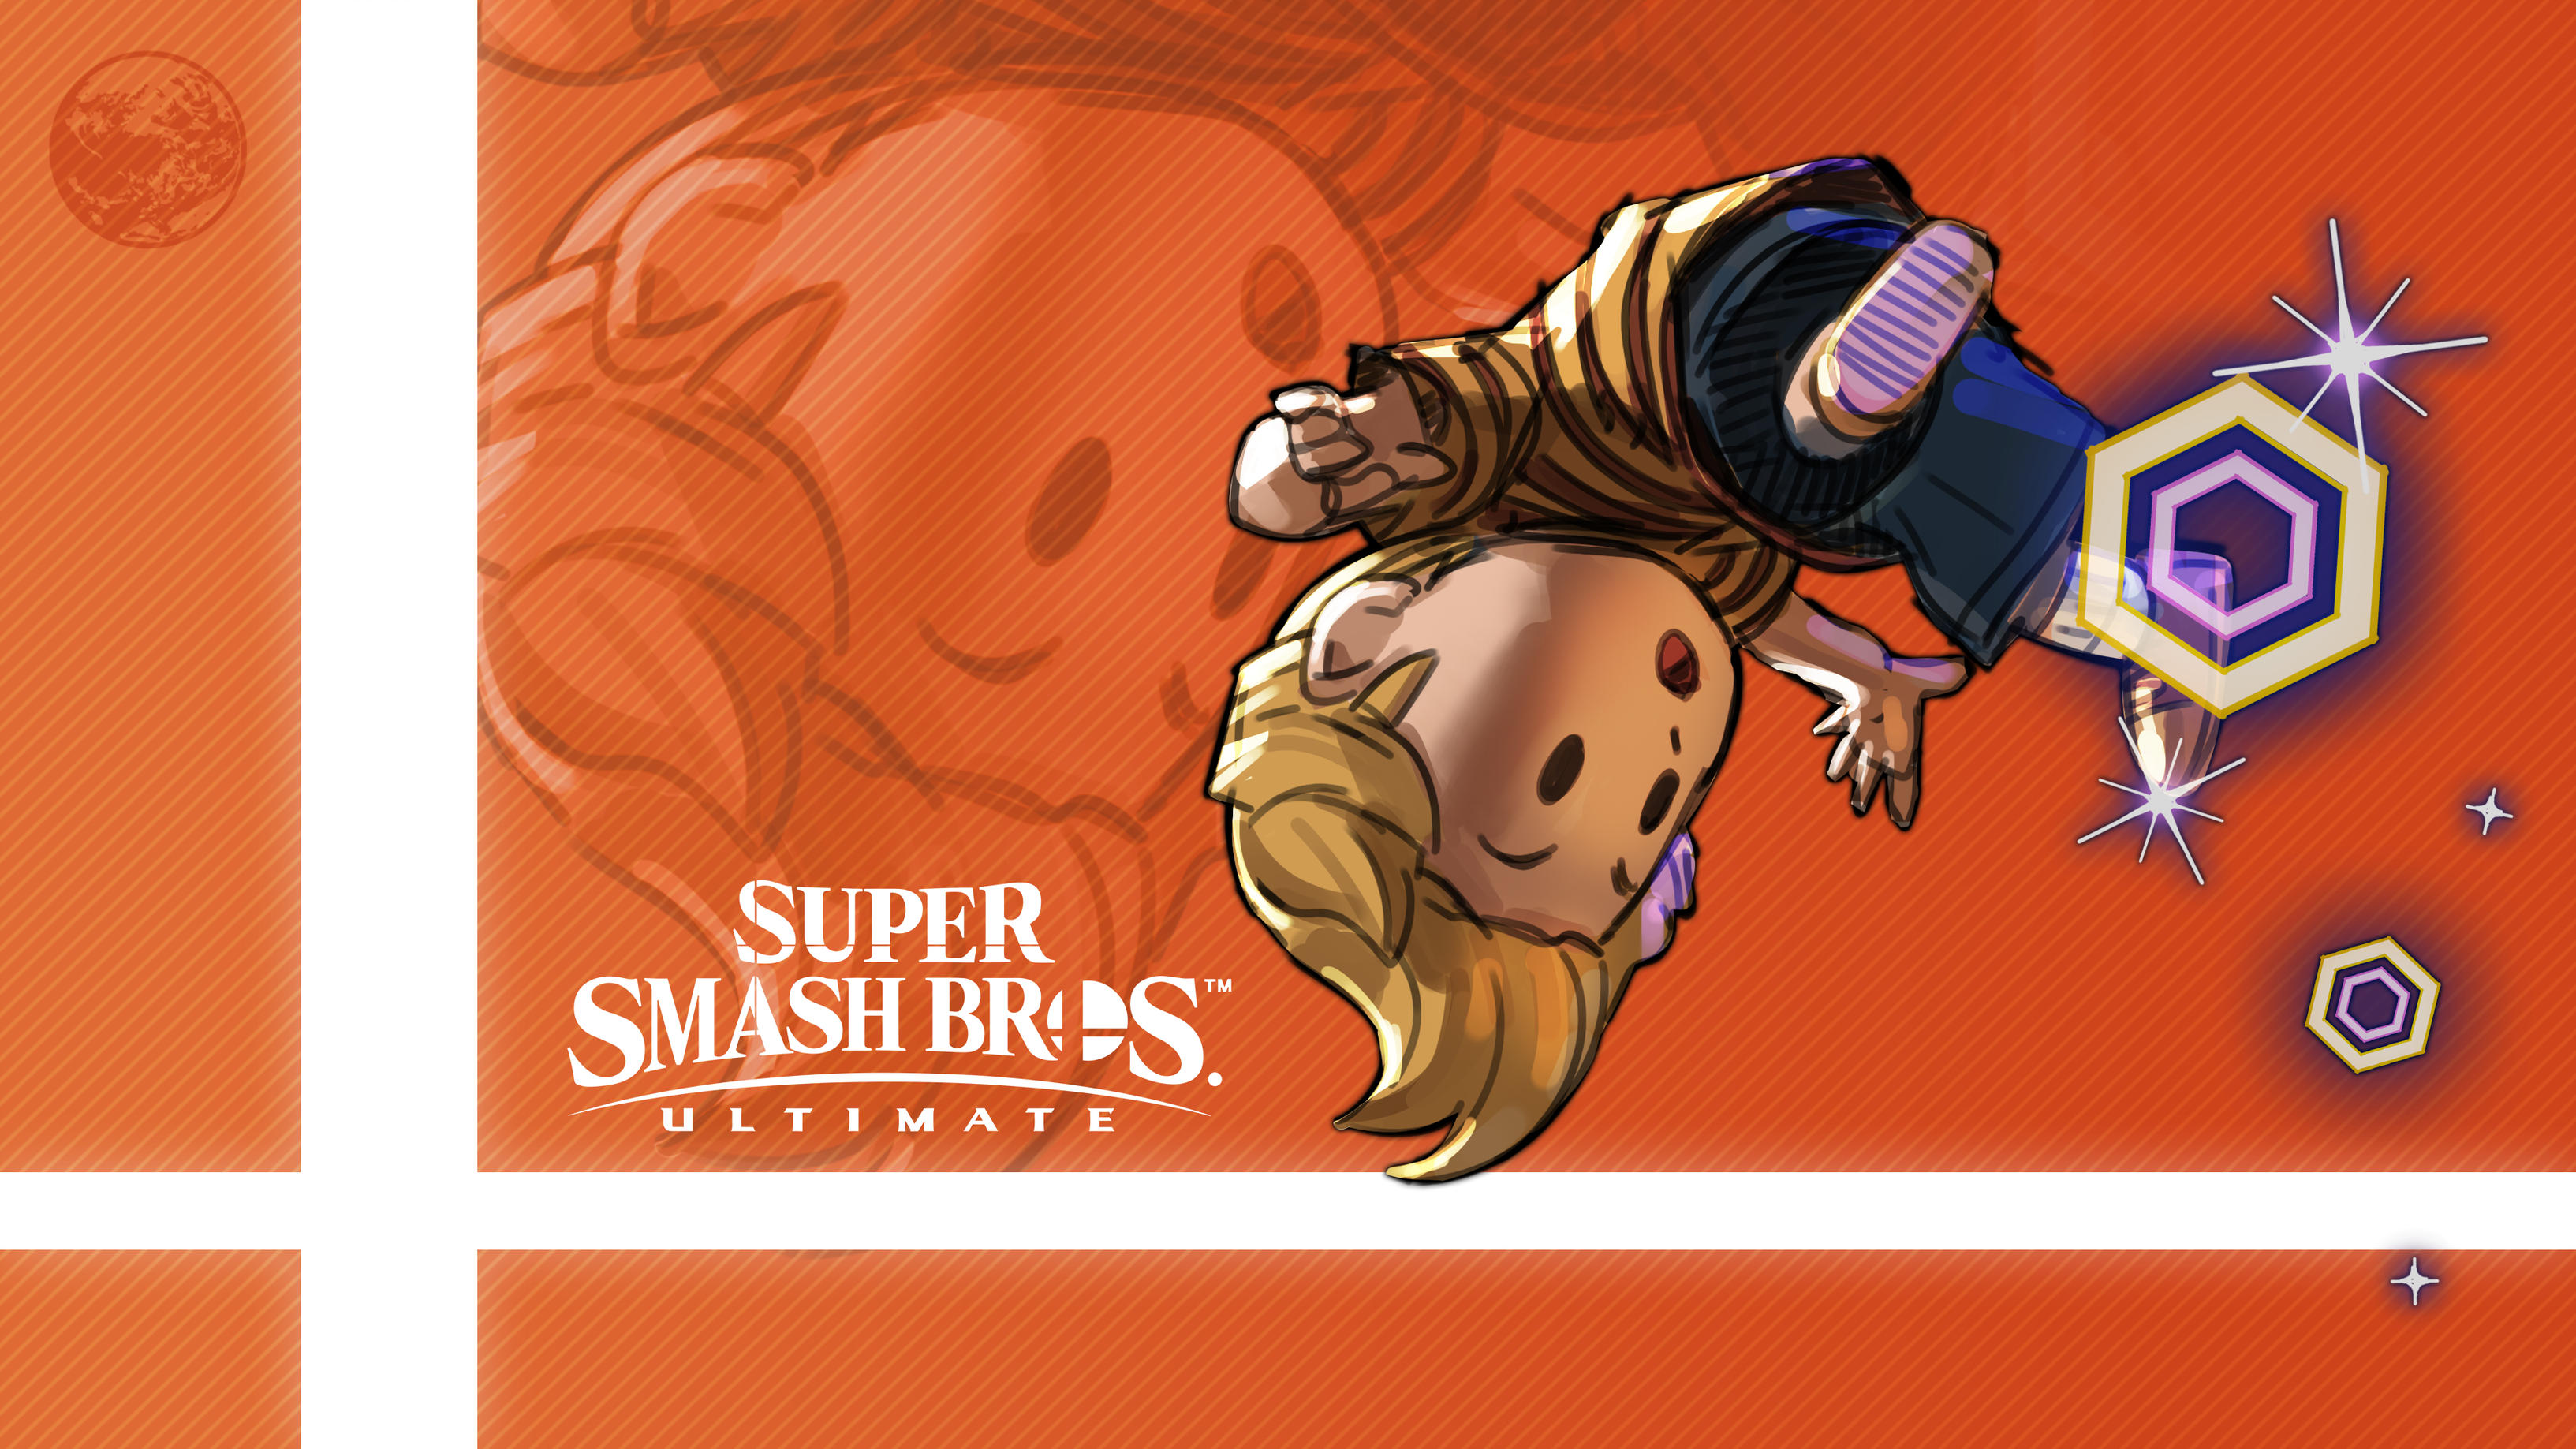 Lucas In Super Smash Bros. Ultimate by Callum Nakajima